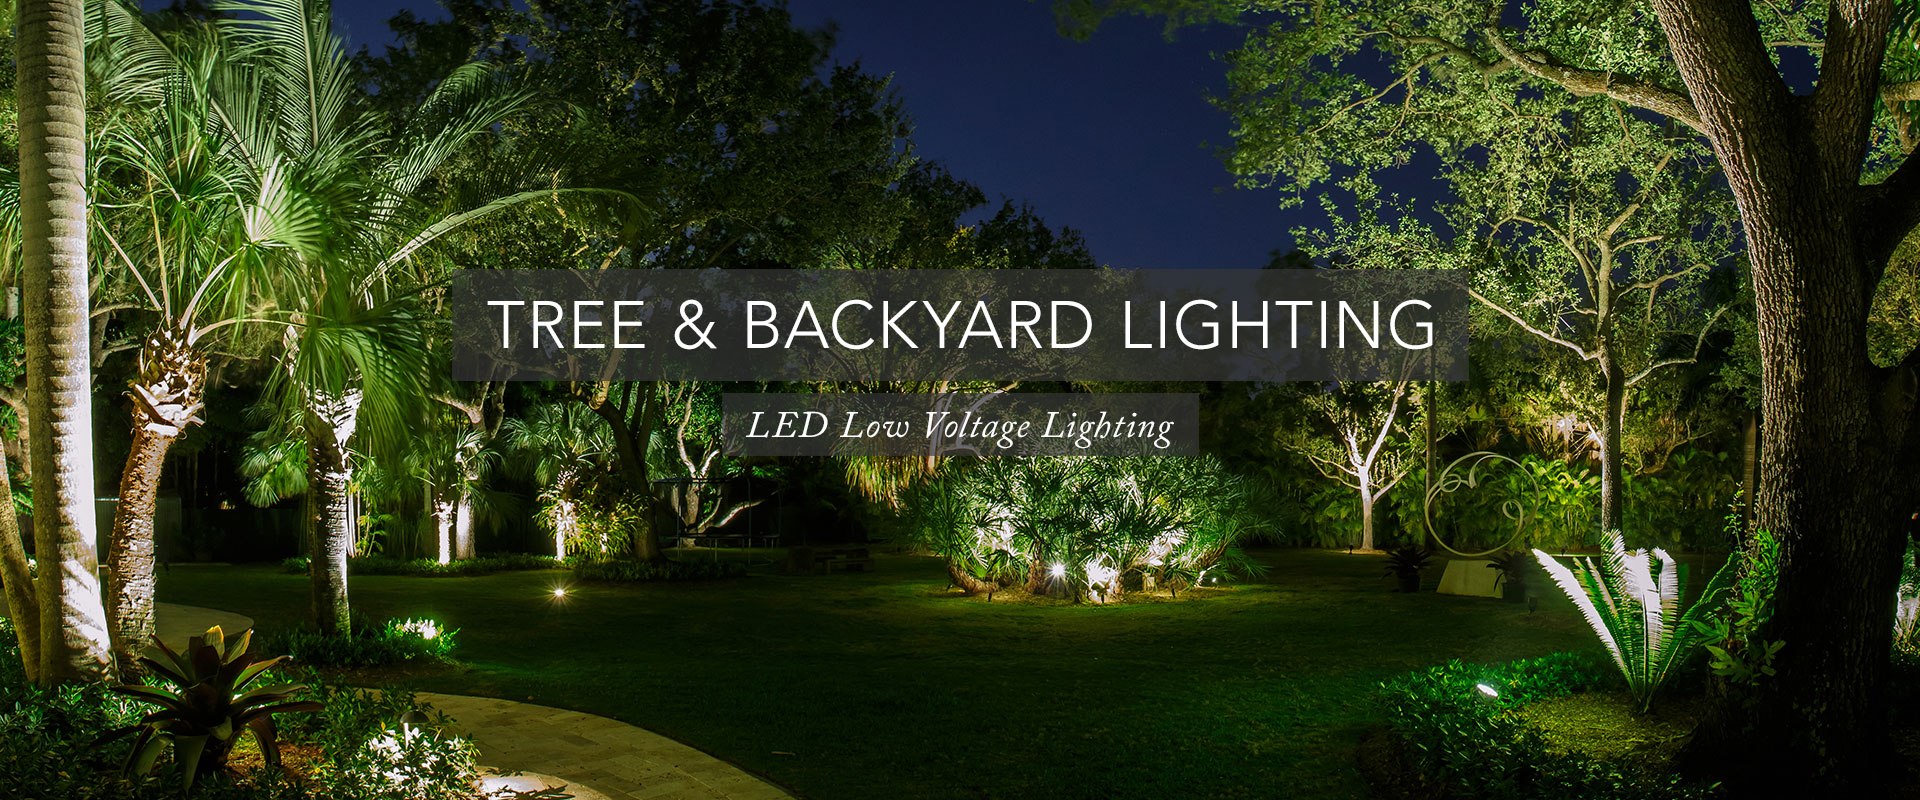 lighting landscape miami led installations outdoor